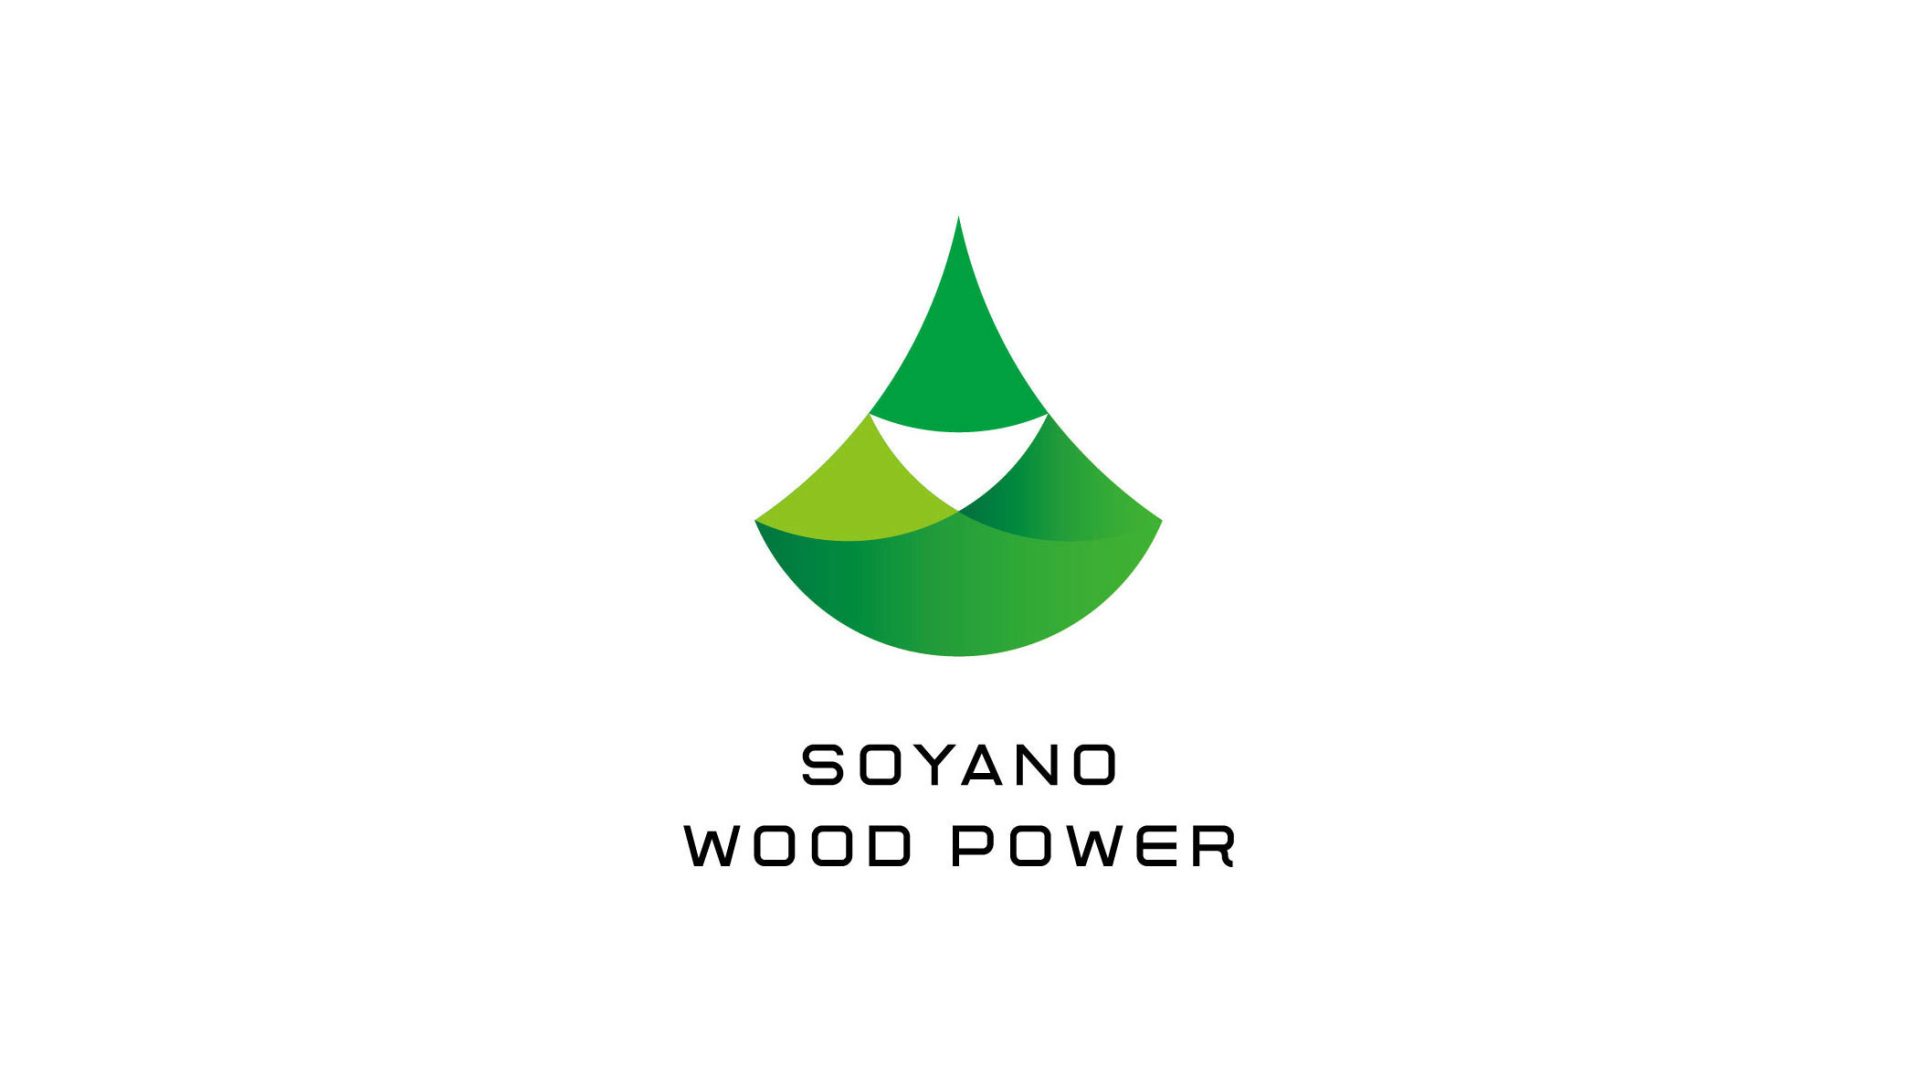 SOYANO WOOD POWER